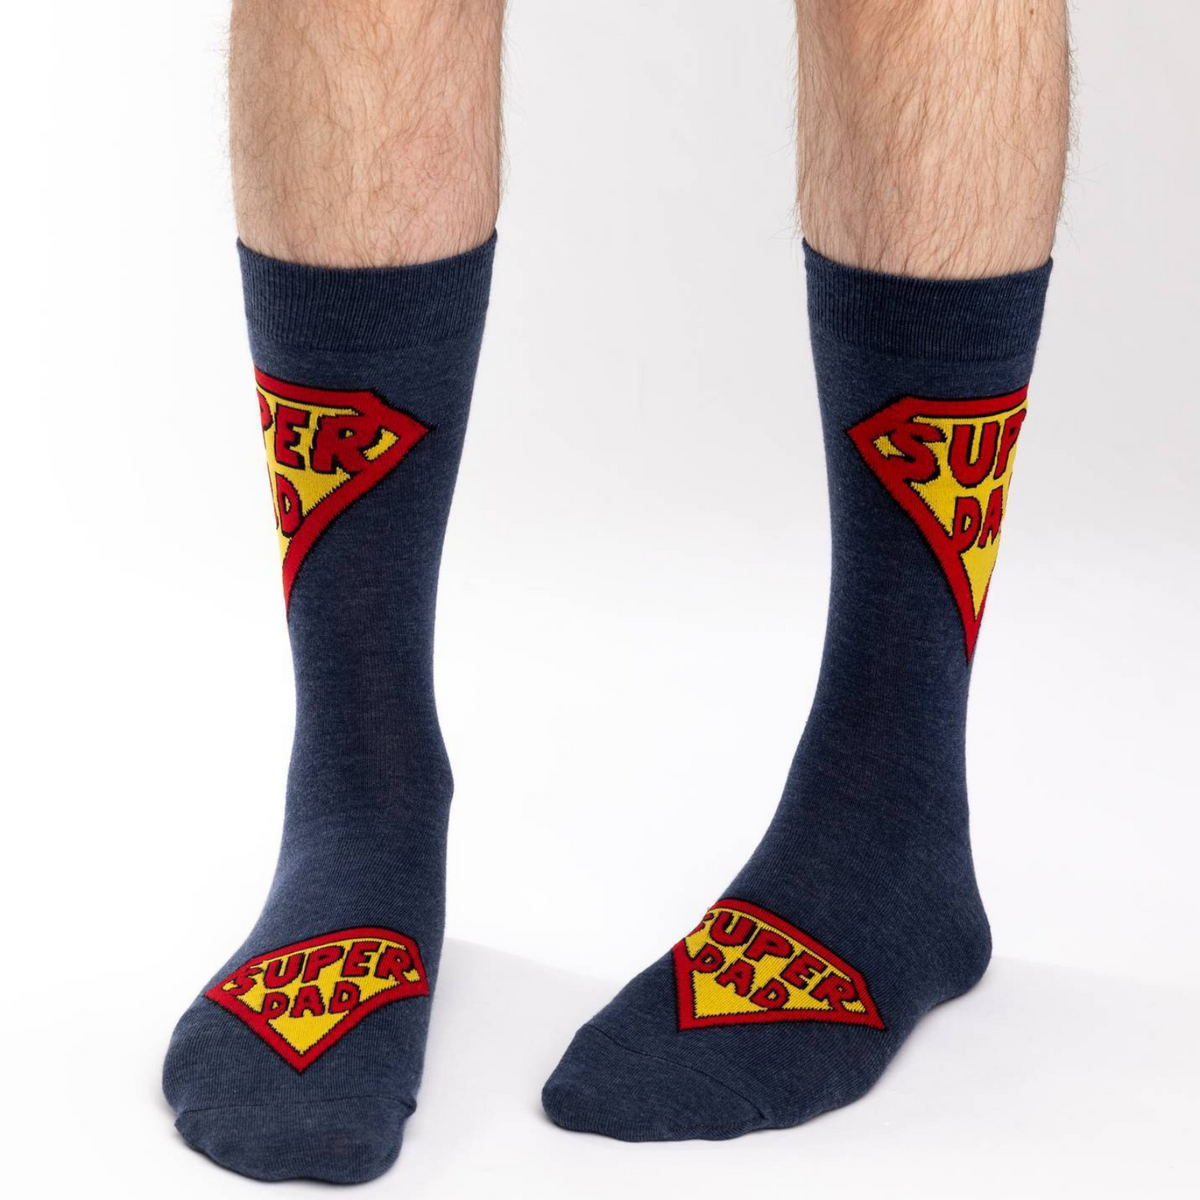 Good Luck Sock blue crew men&#39;s sock with Super Dad written on them on model&#39;s feet